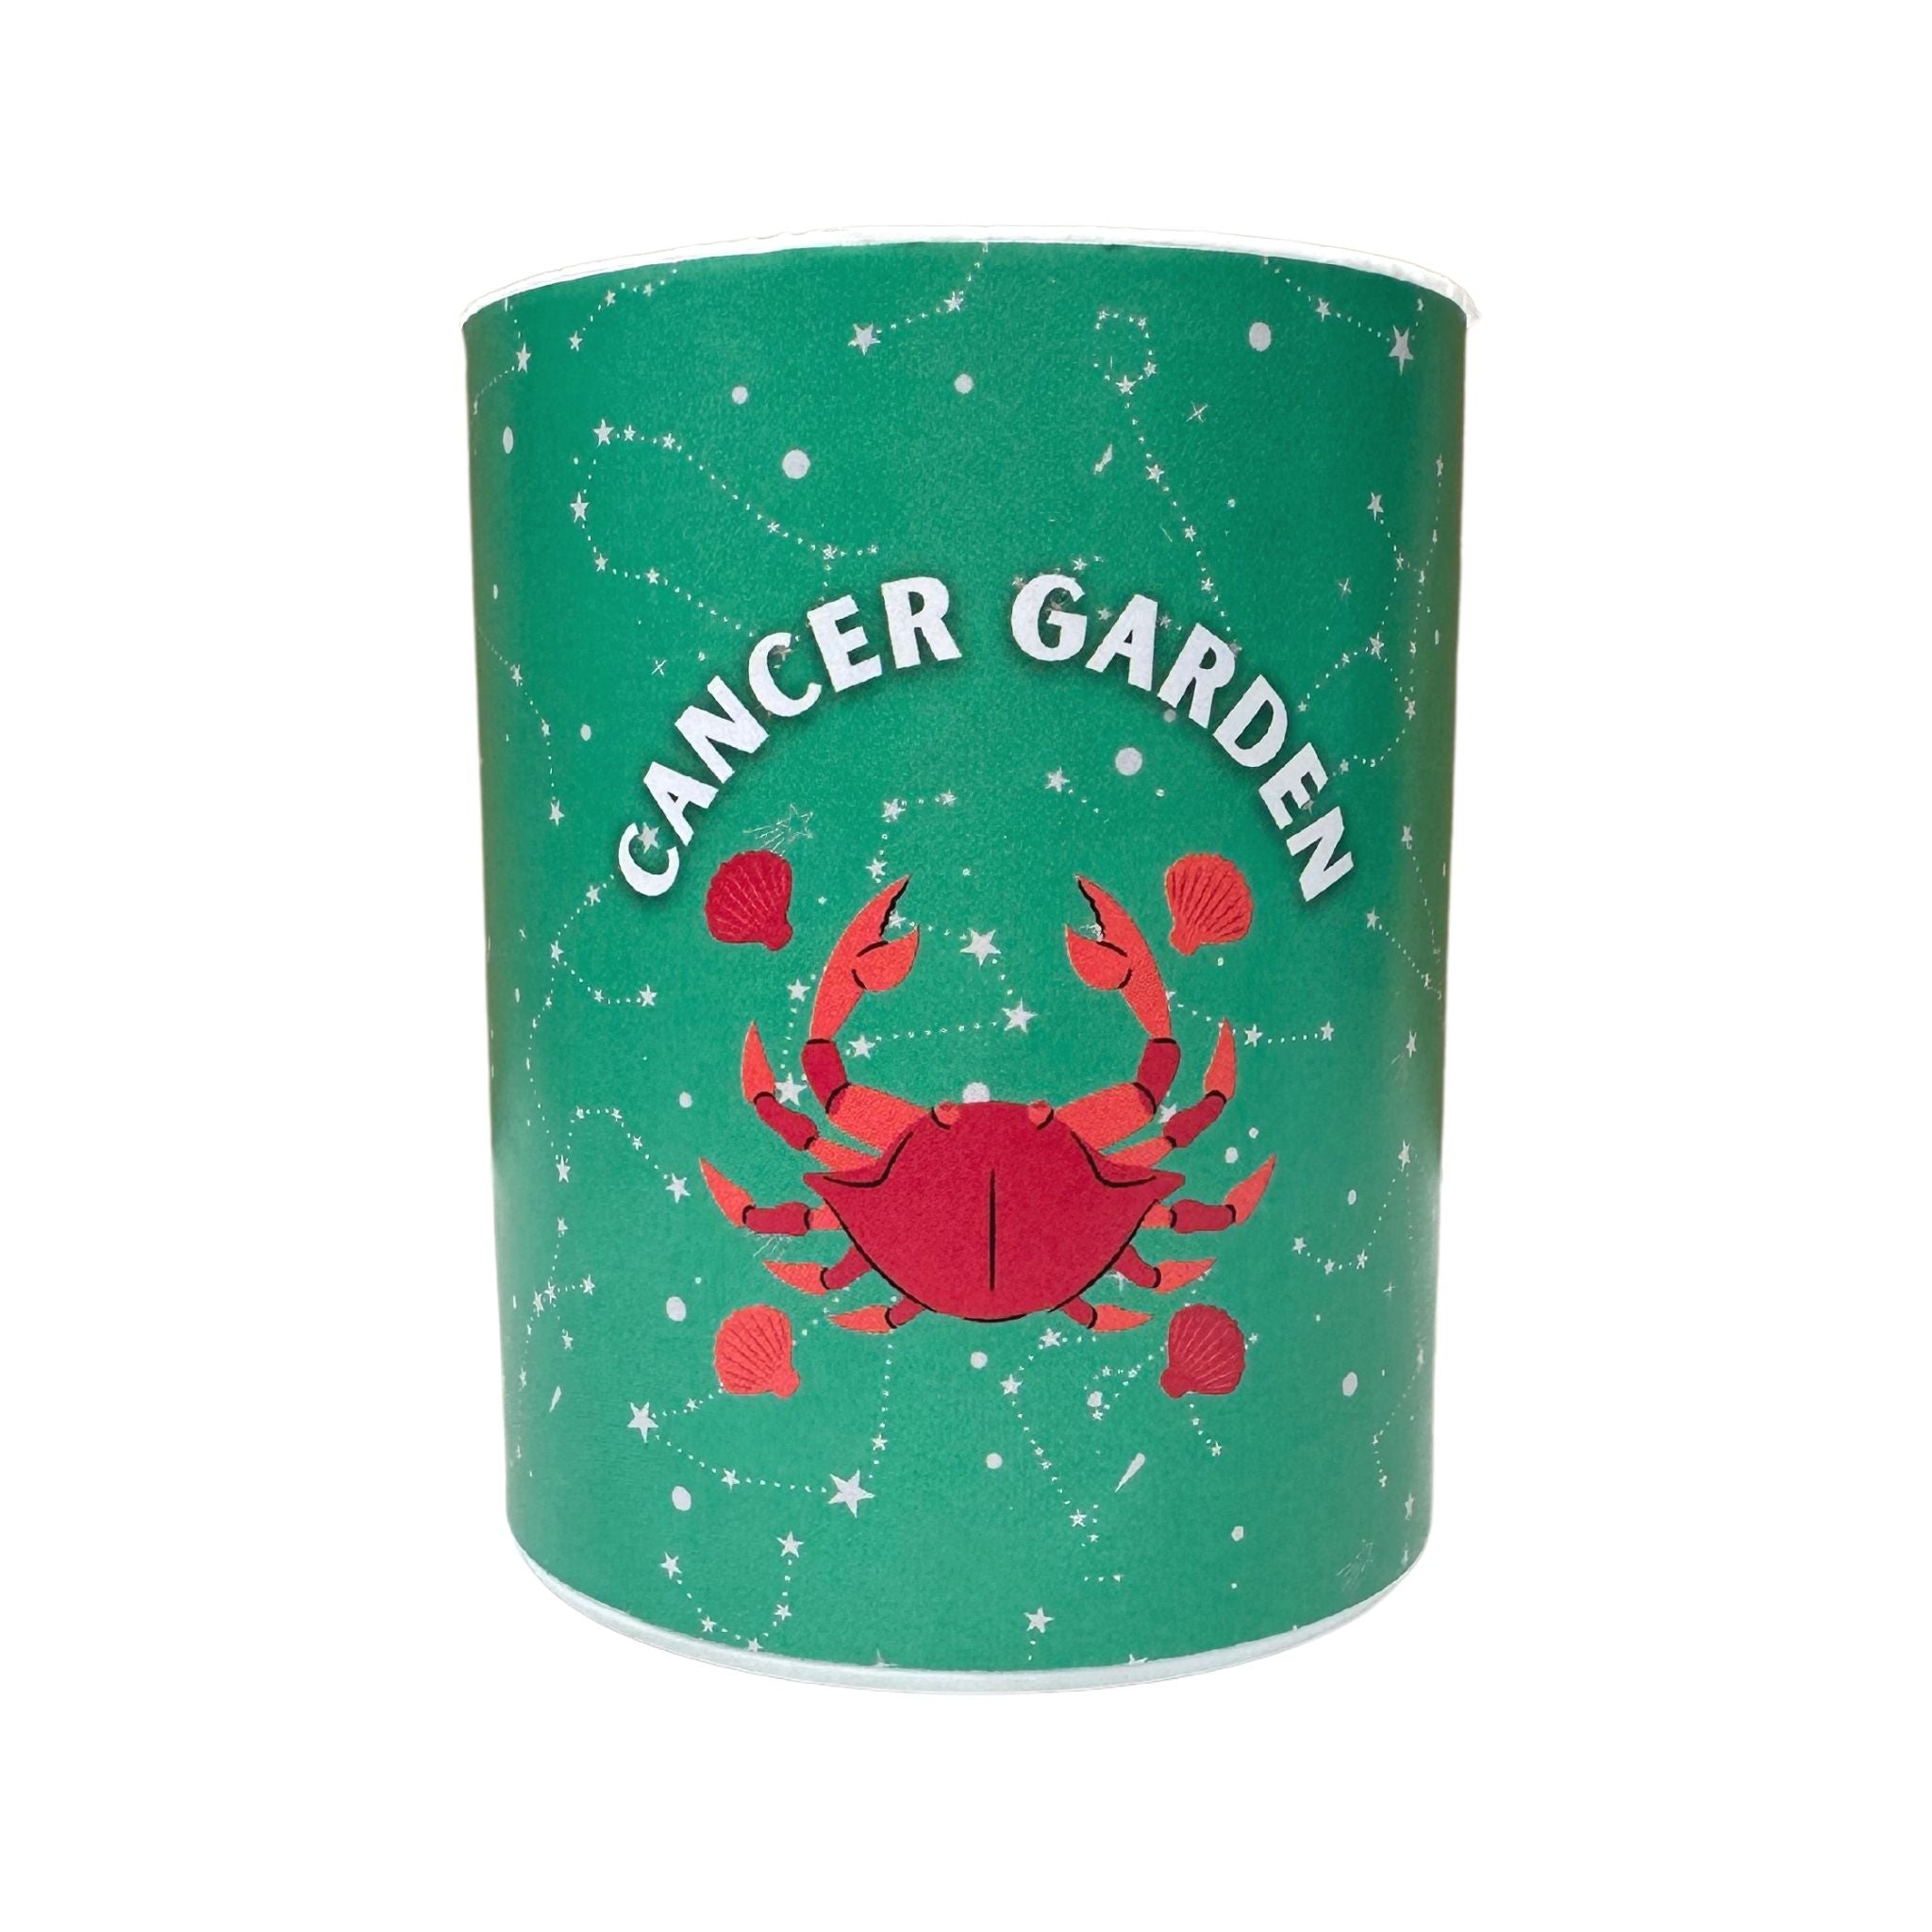 Cancer Garden Grocan